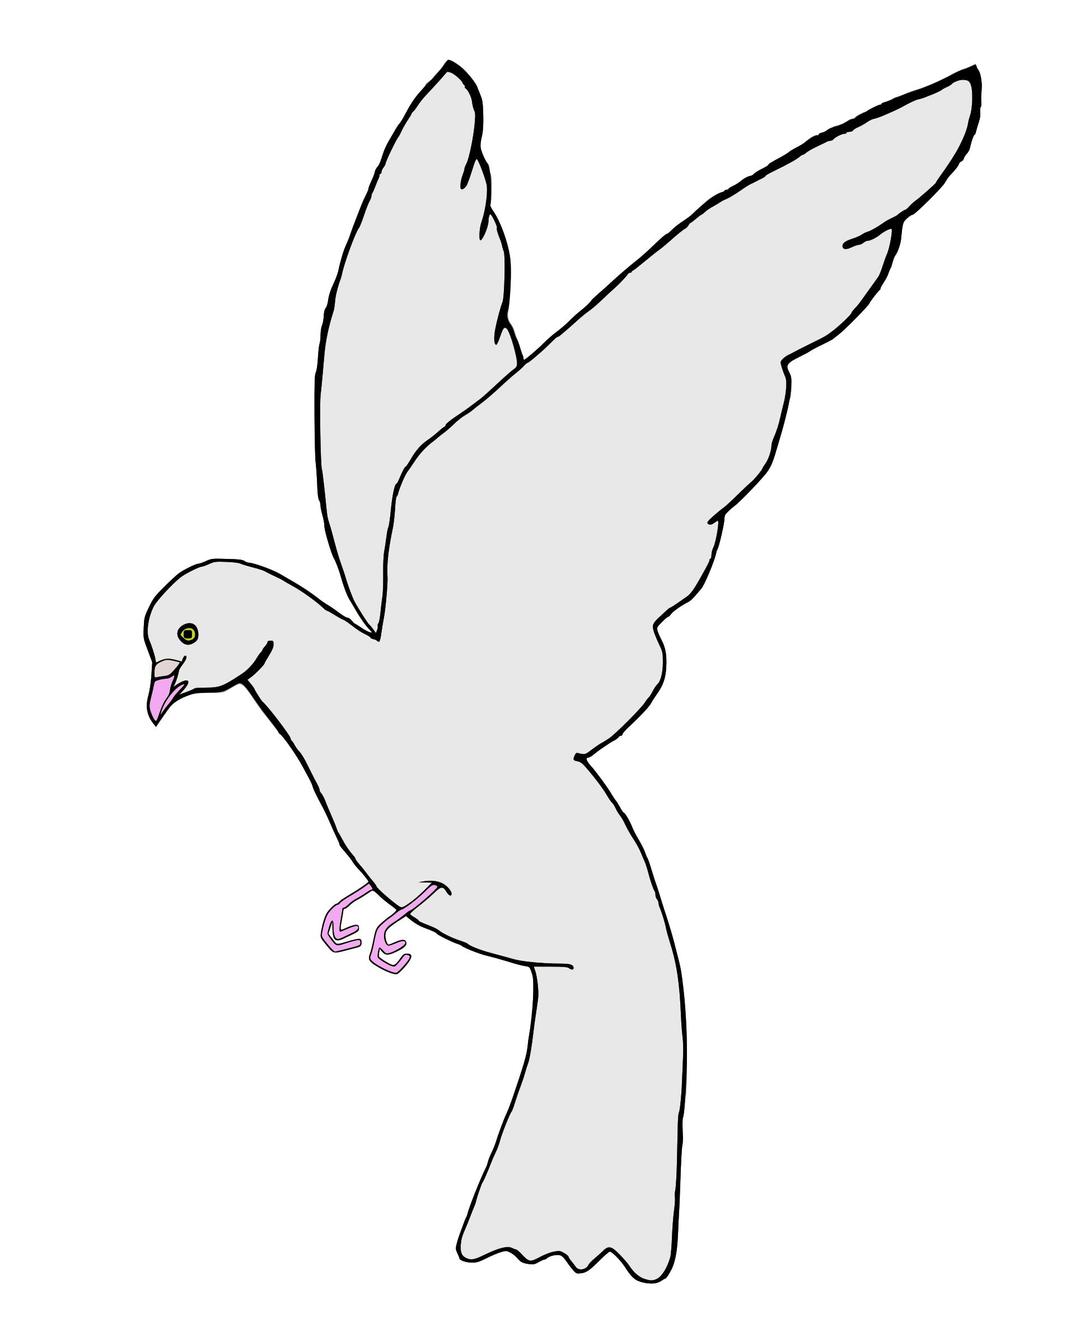 paloma (dove) png transparent